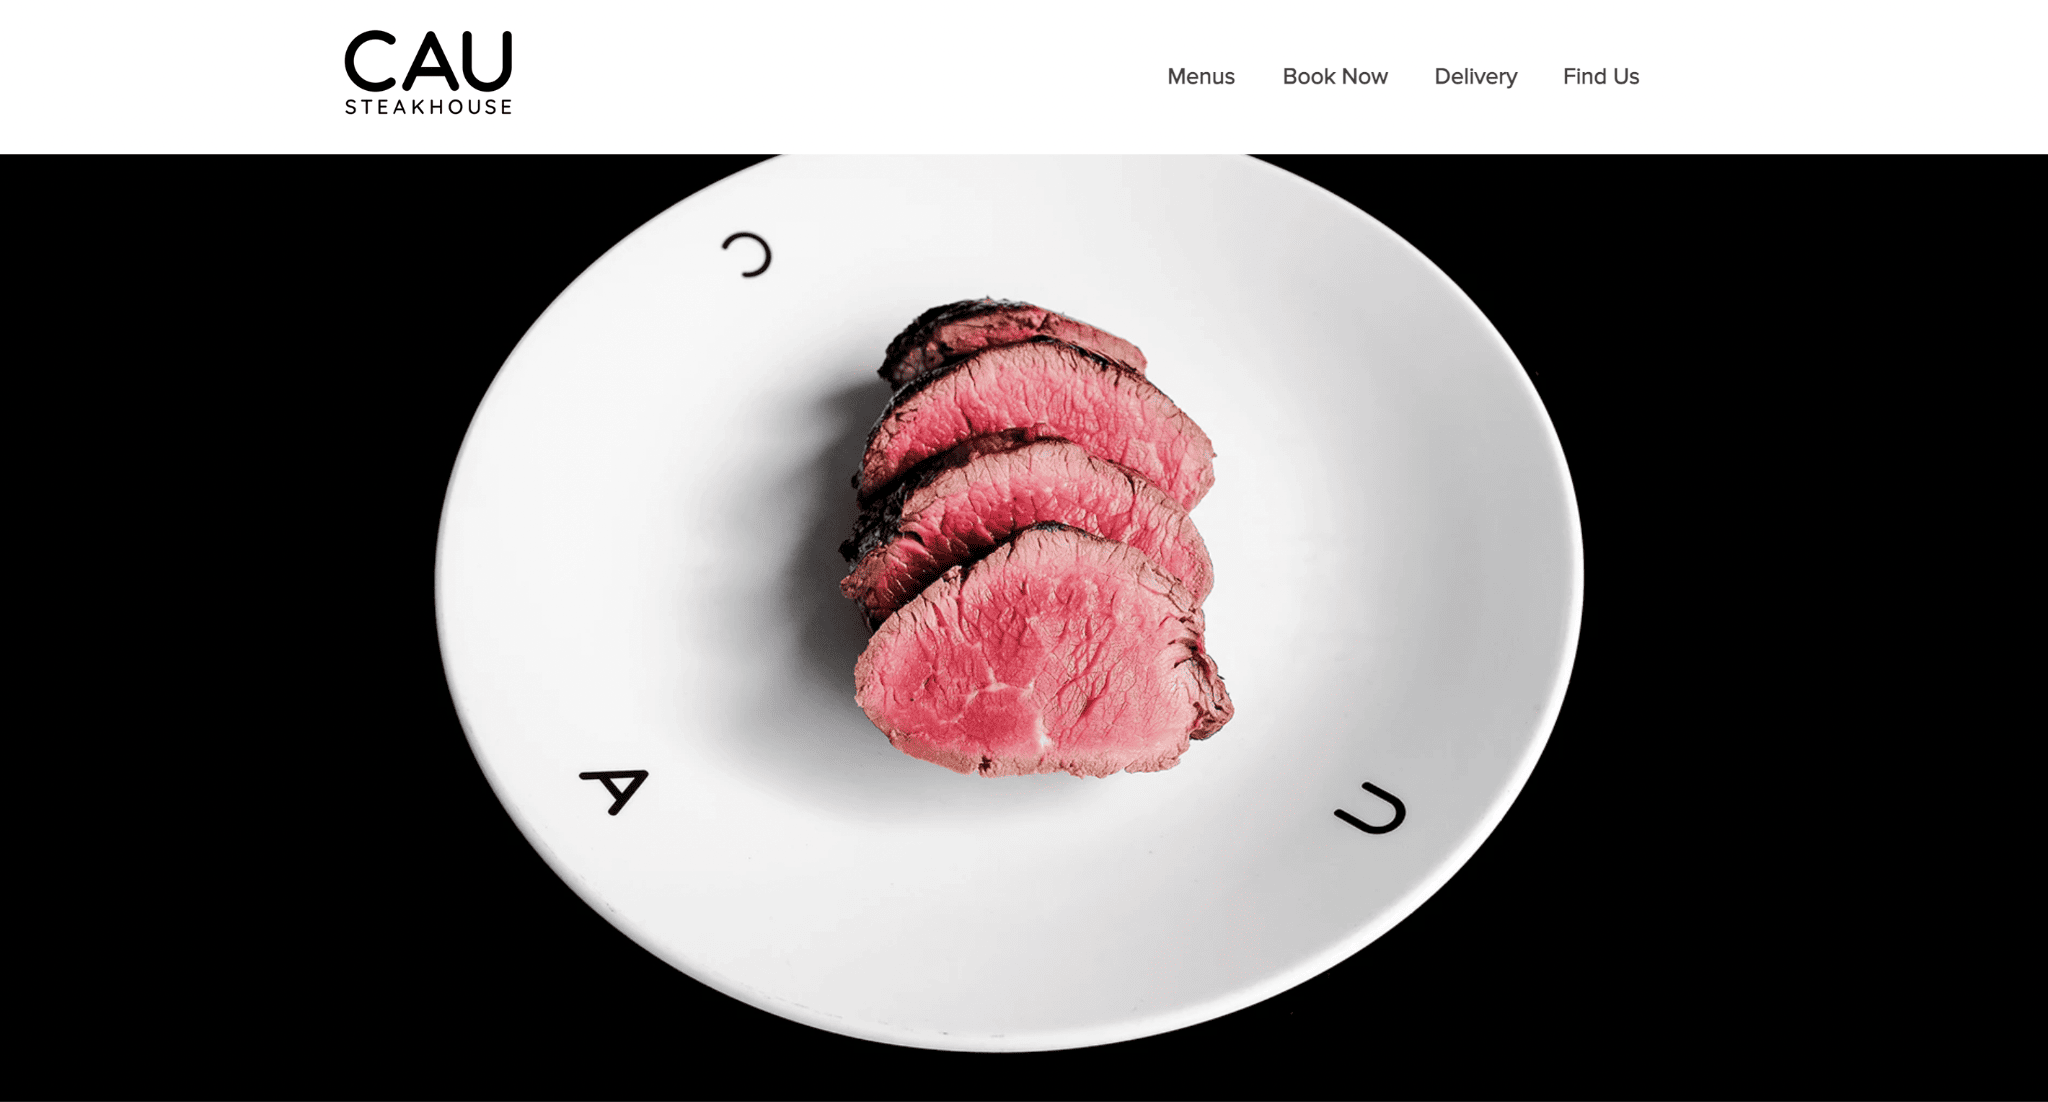 sitio web del restaurante wix - cau